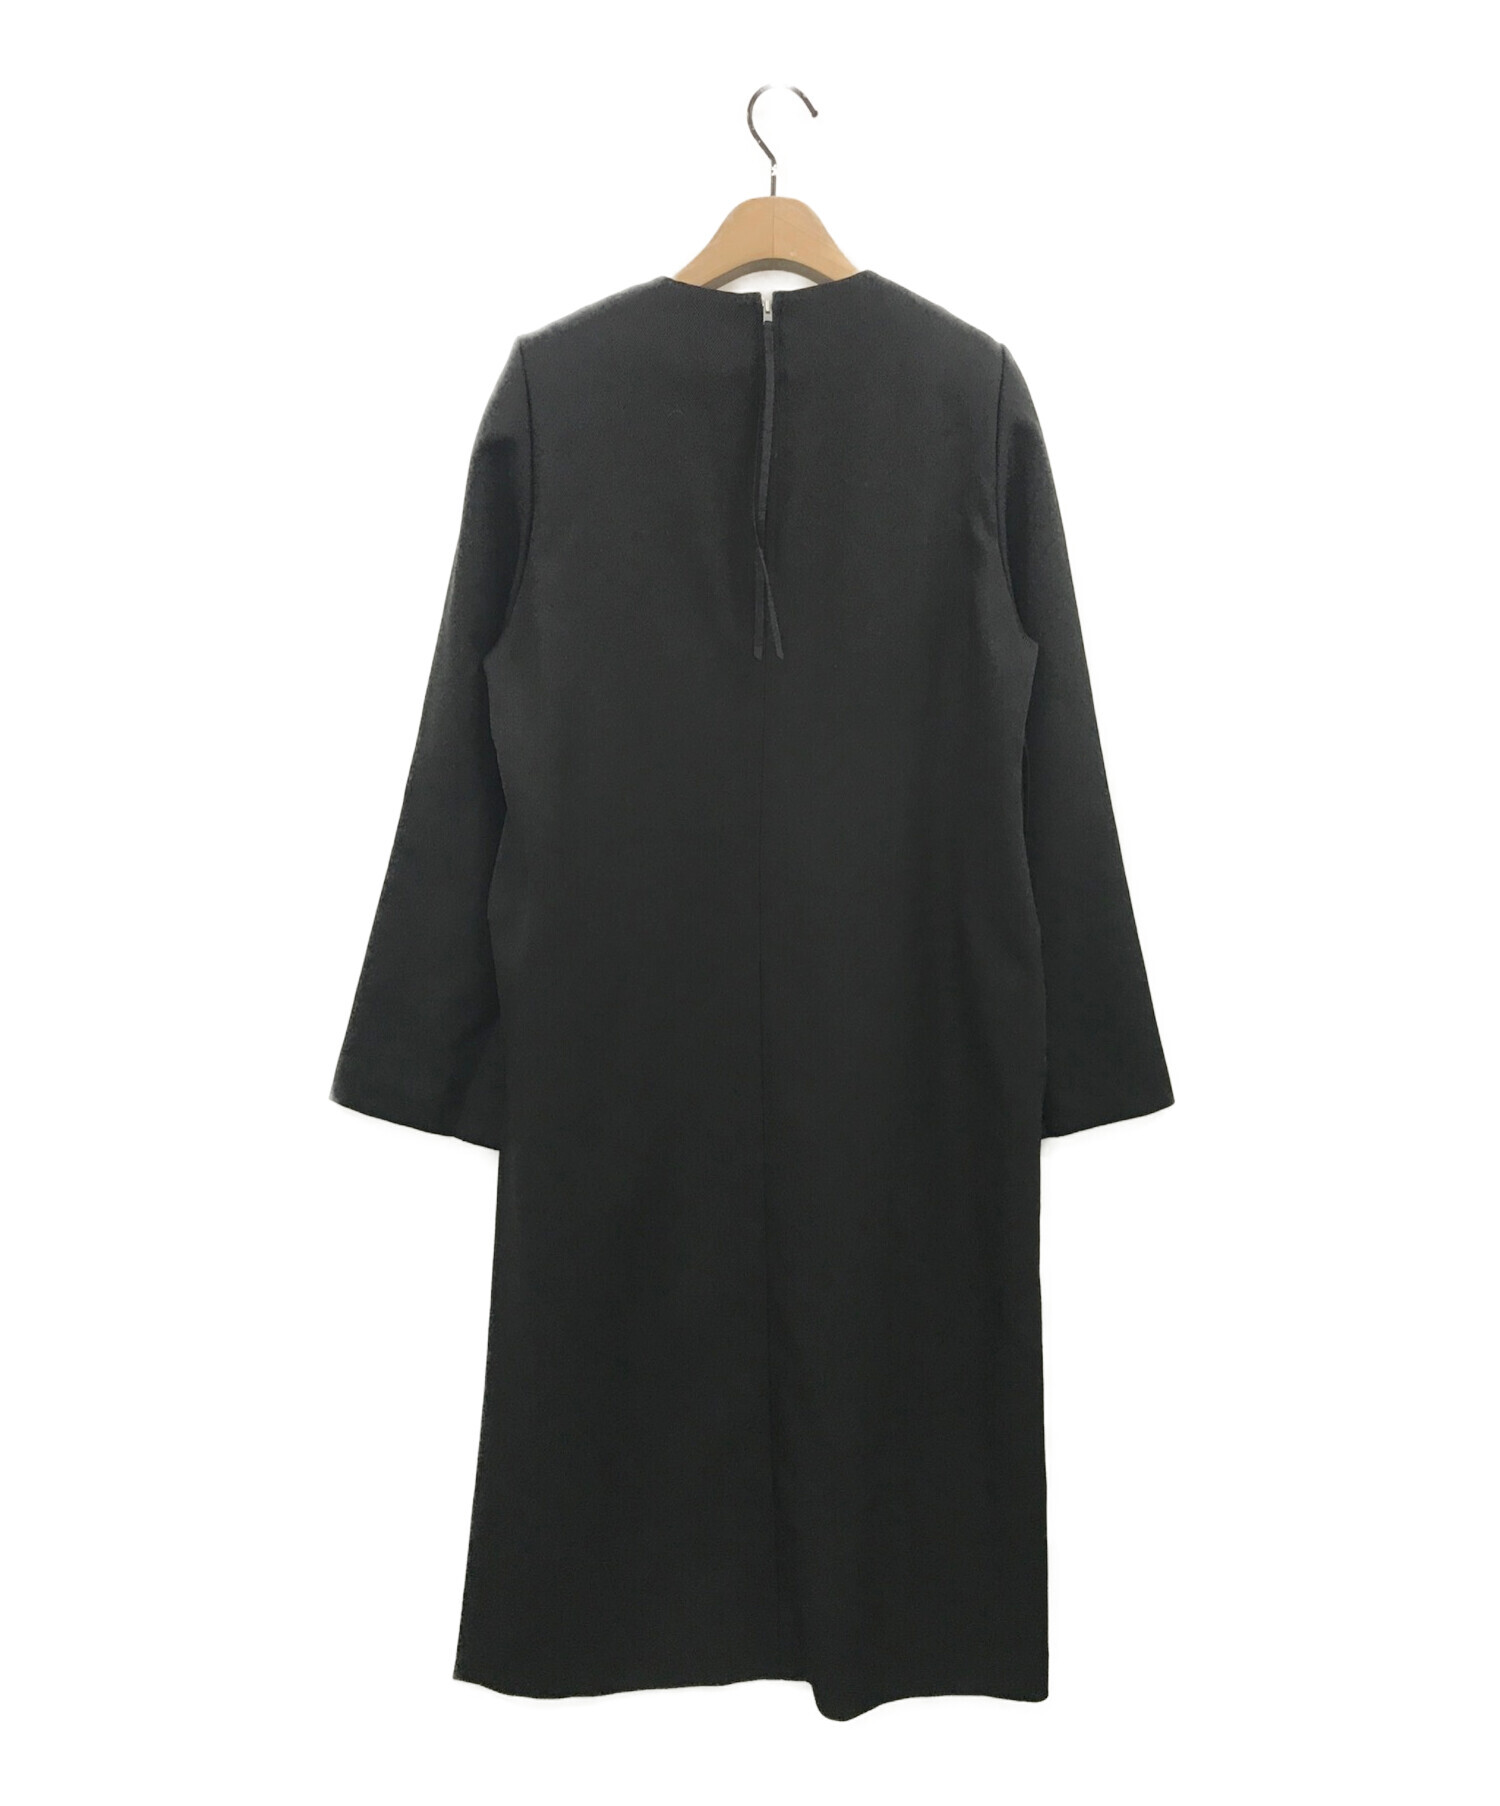 HYKE (ハイク) ECOCYCLE BELL SLEEVE DRESS ブラック サイズ:1